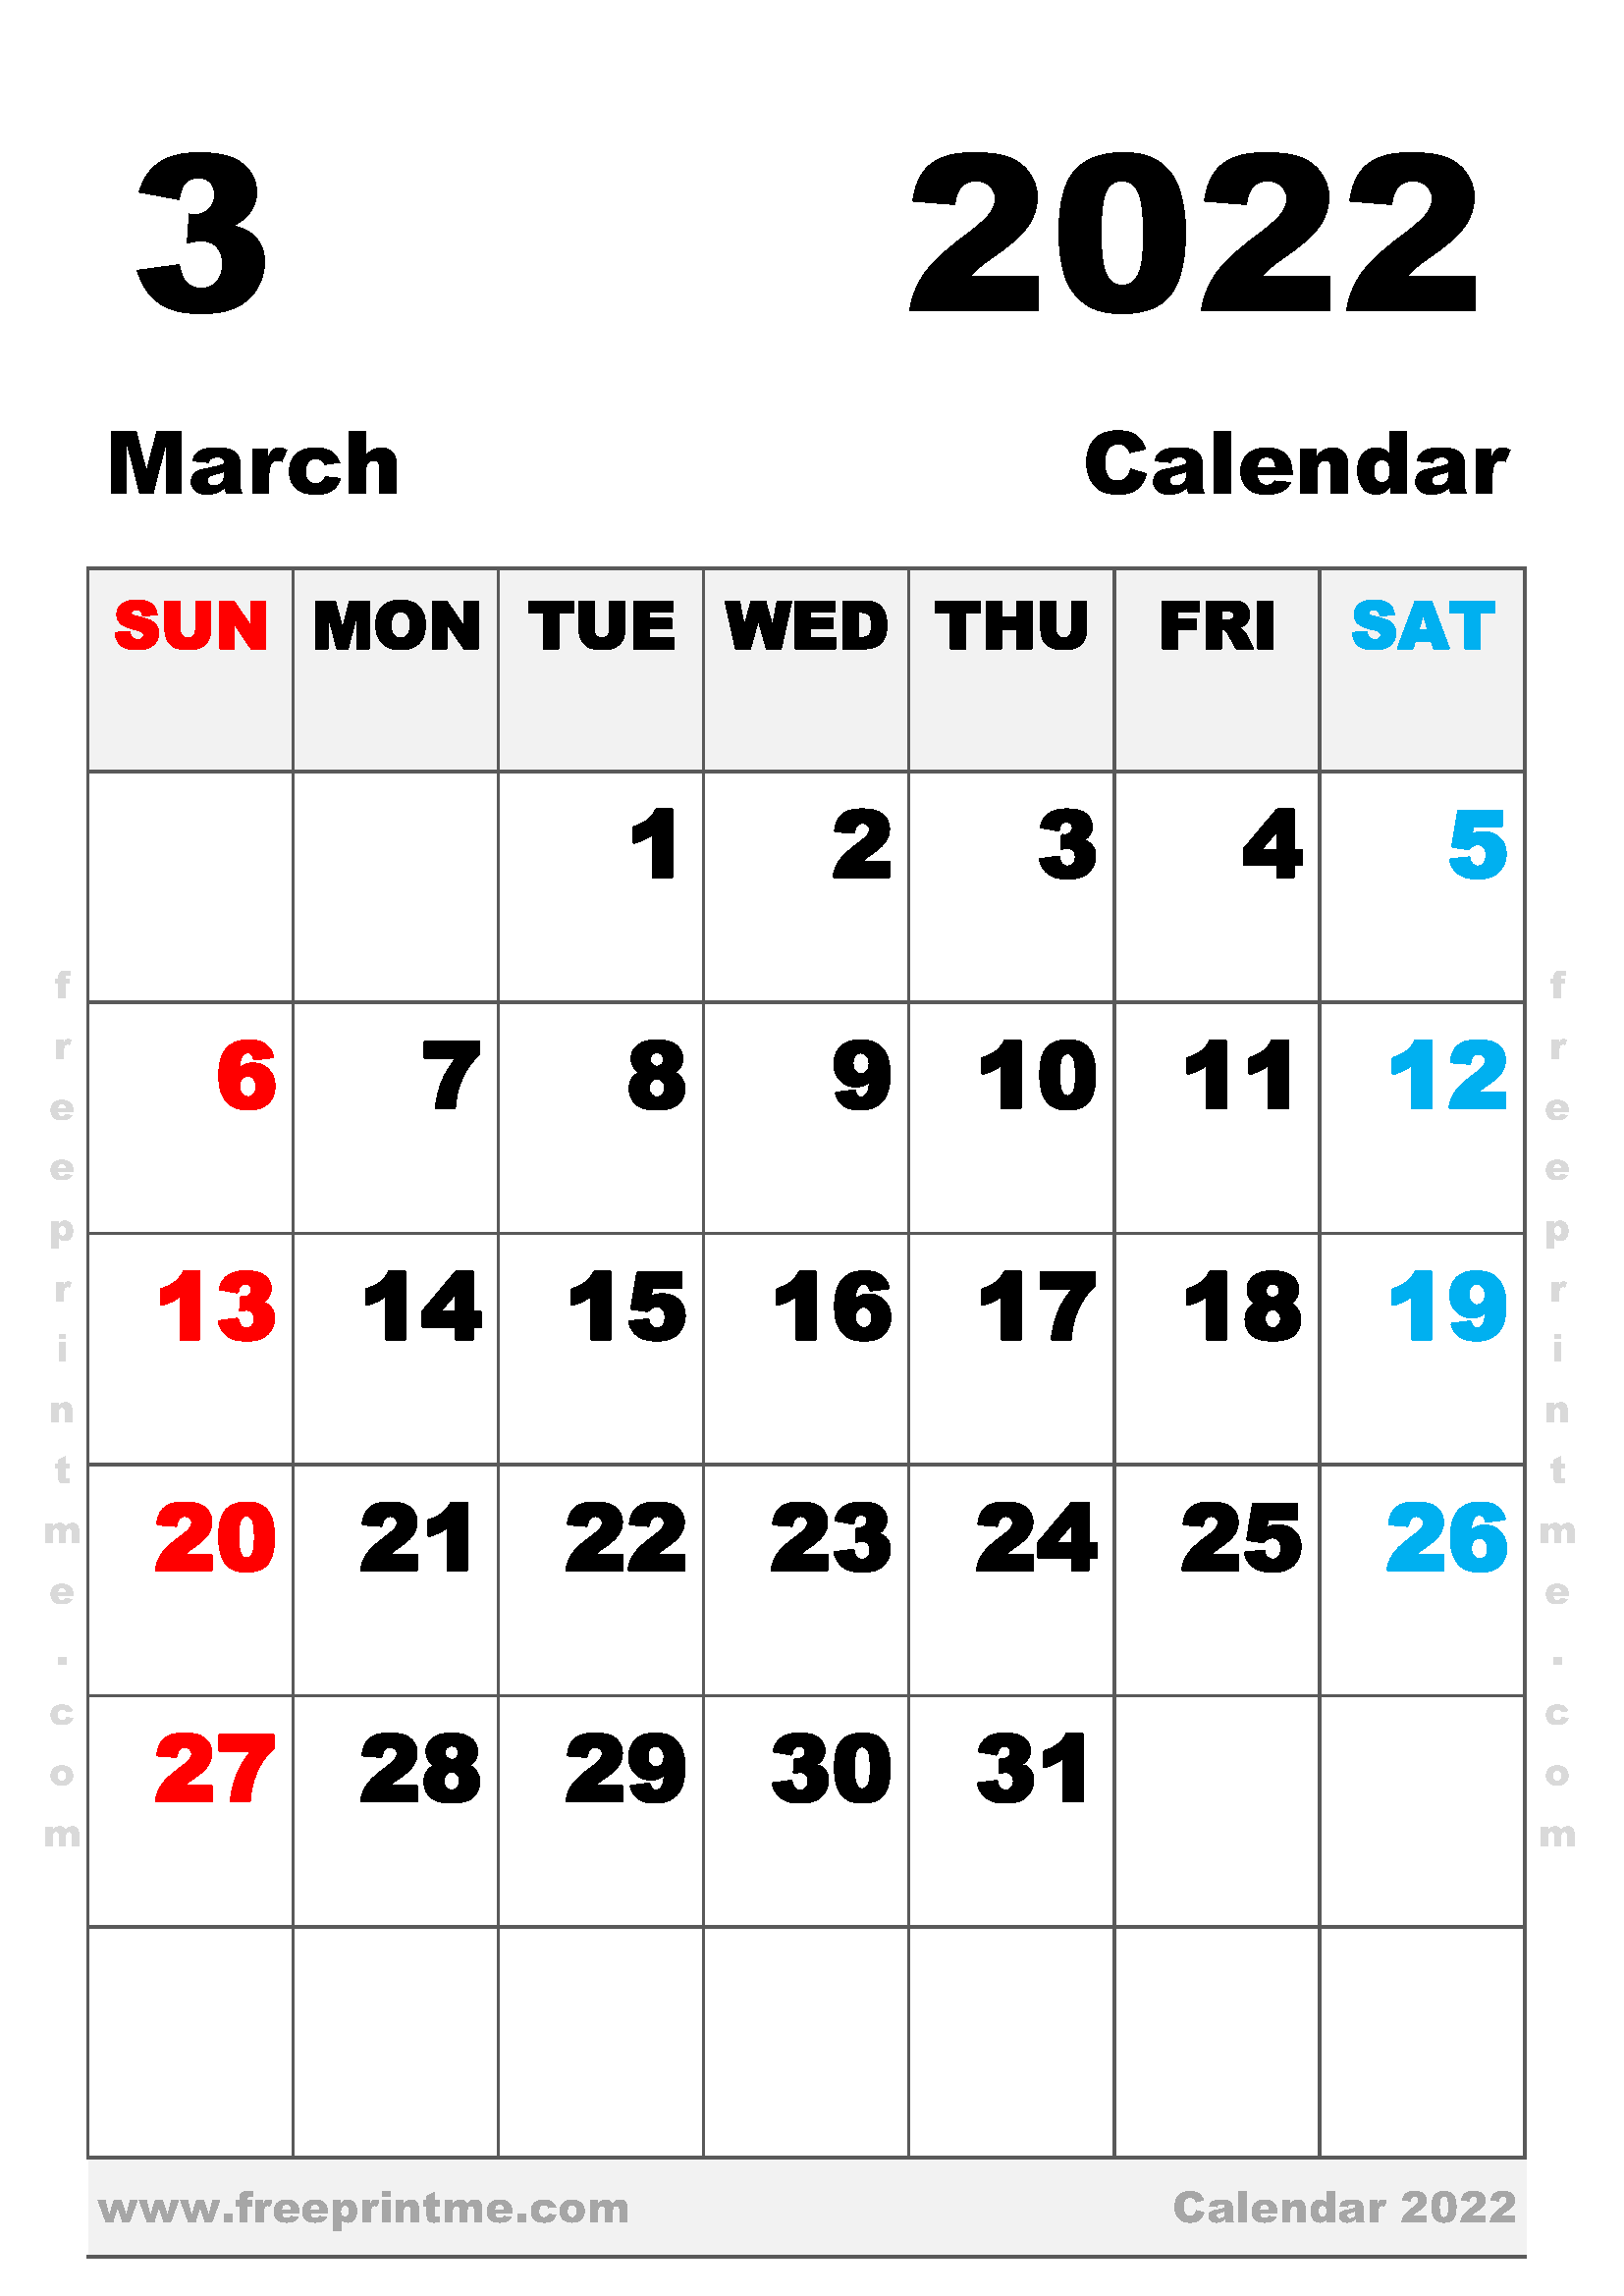 March Calendar 2022 Free Printable March 2022 Calendar A4